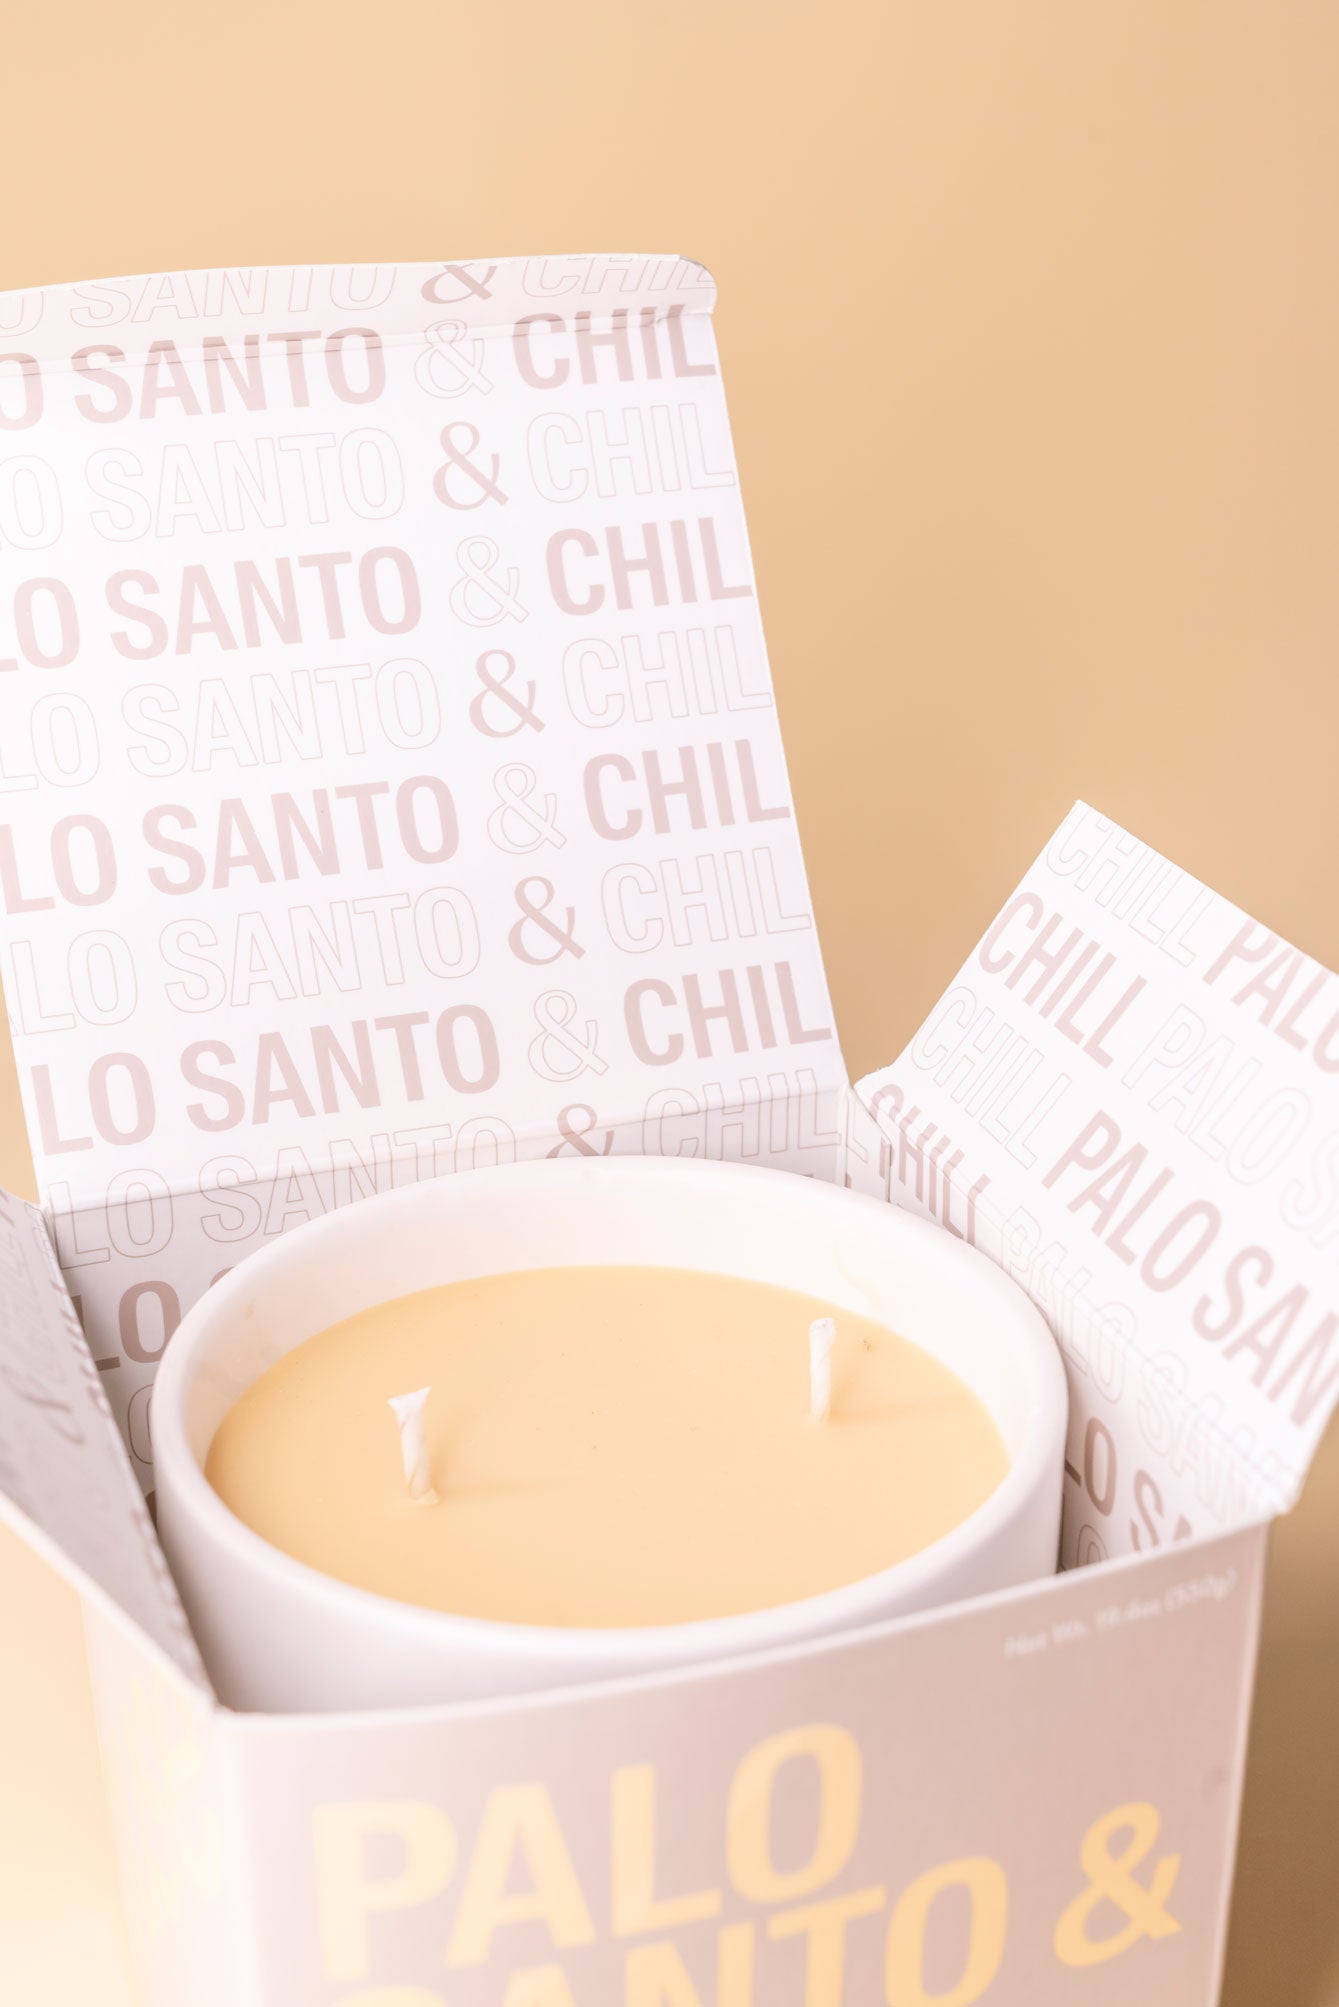 Palo Santo & Chill Candle